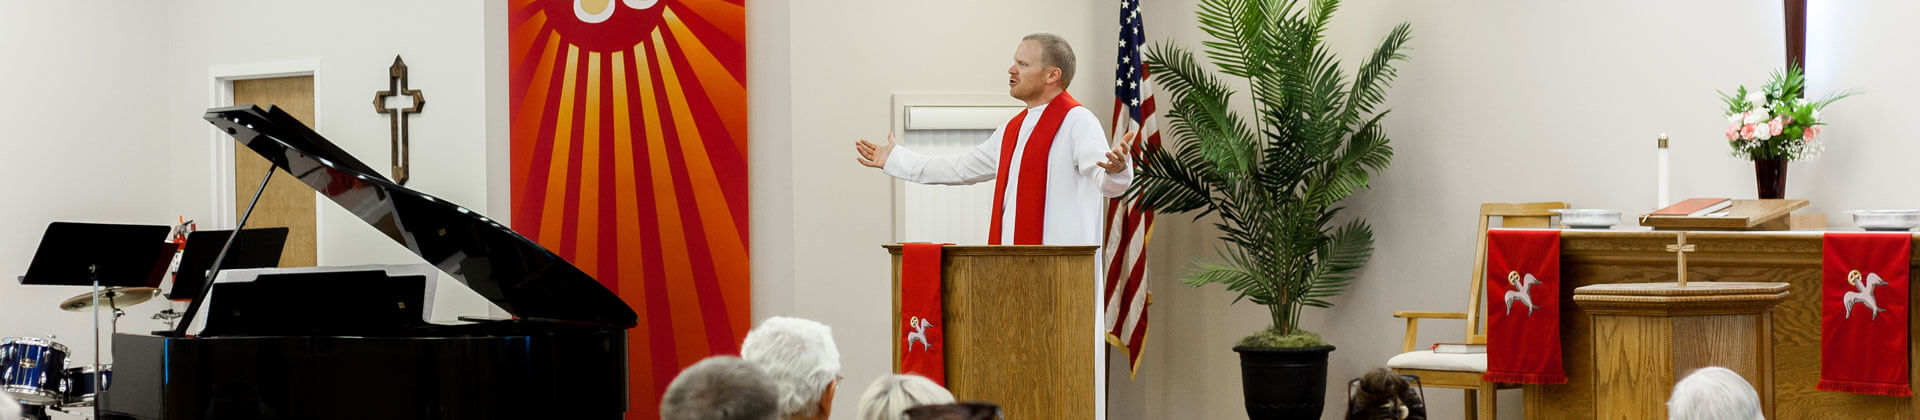 Pastor Craig Born at Risen Savior Church